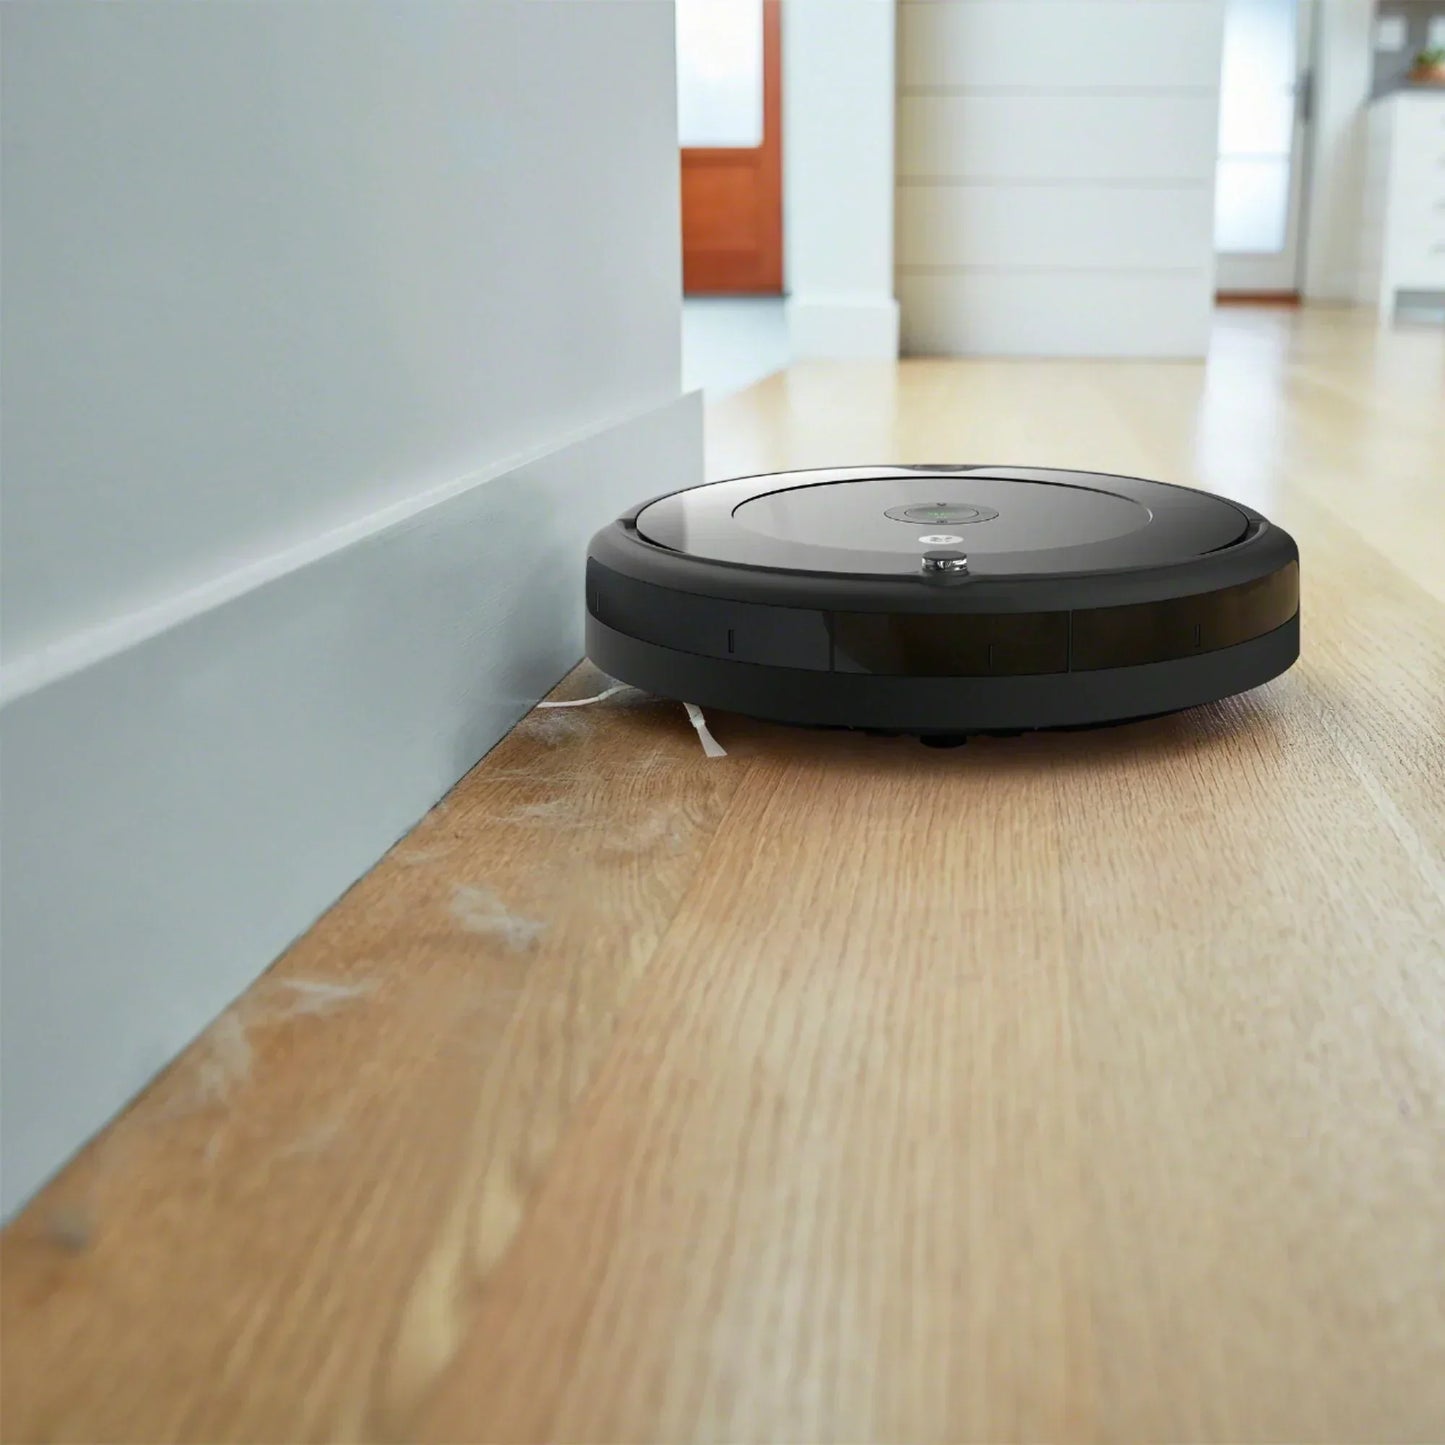 iRobot Roomba 694 Wi-Fi Connected Robot Vacuum, Charcoal Grey